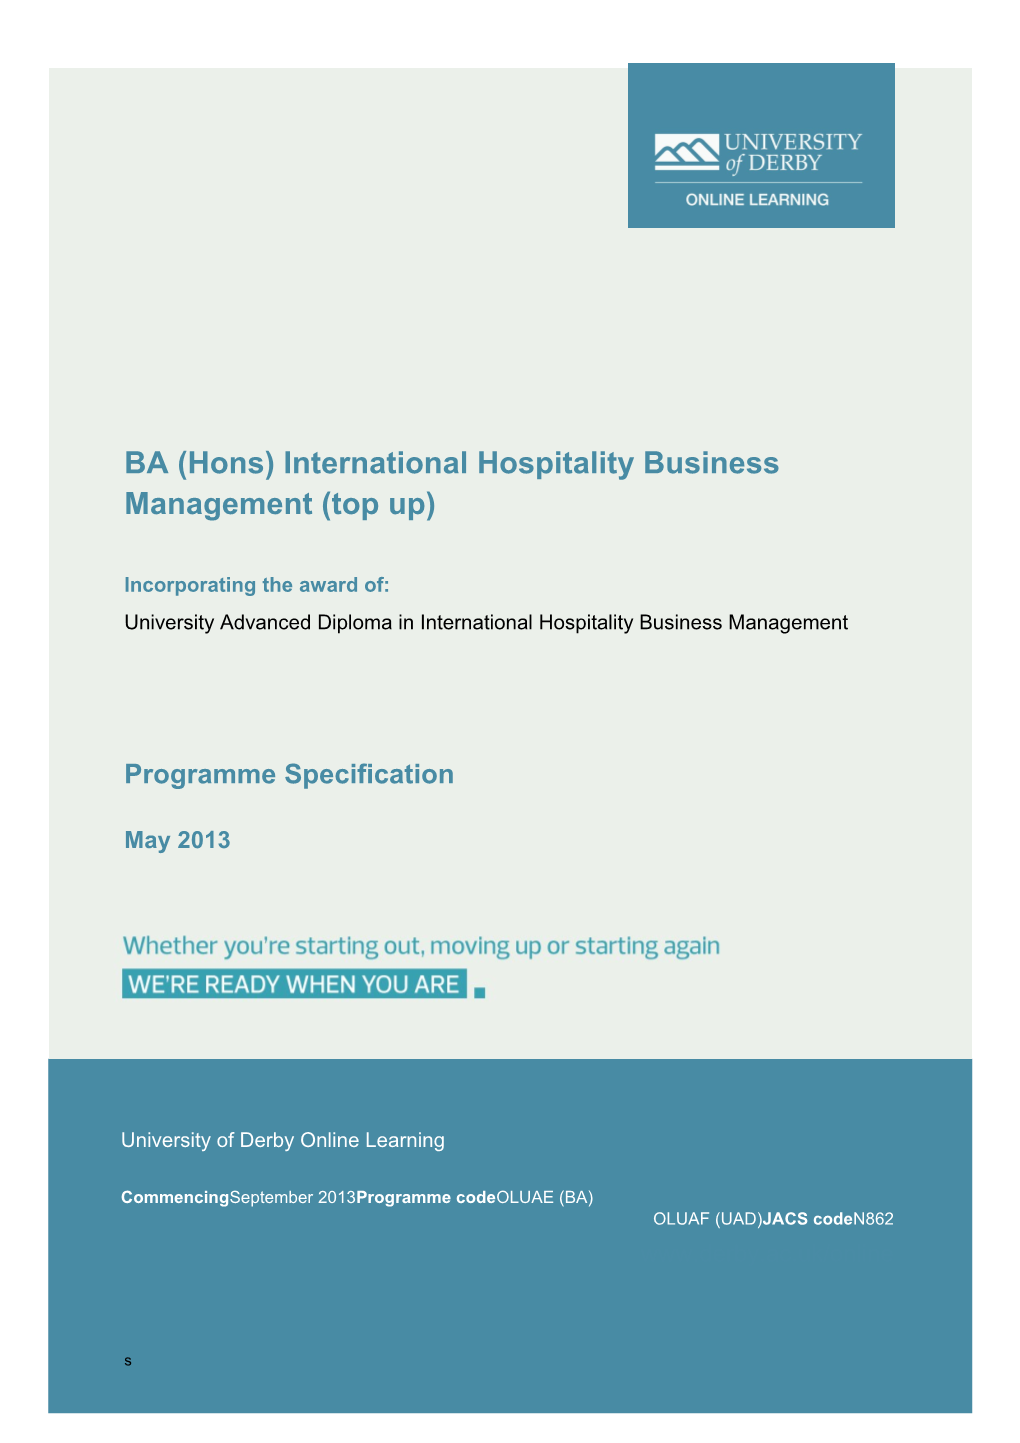 BA (Hons) International Hospitality Business Management (Top Up)